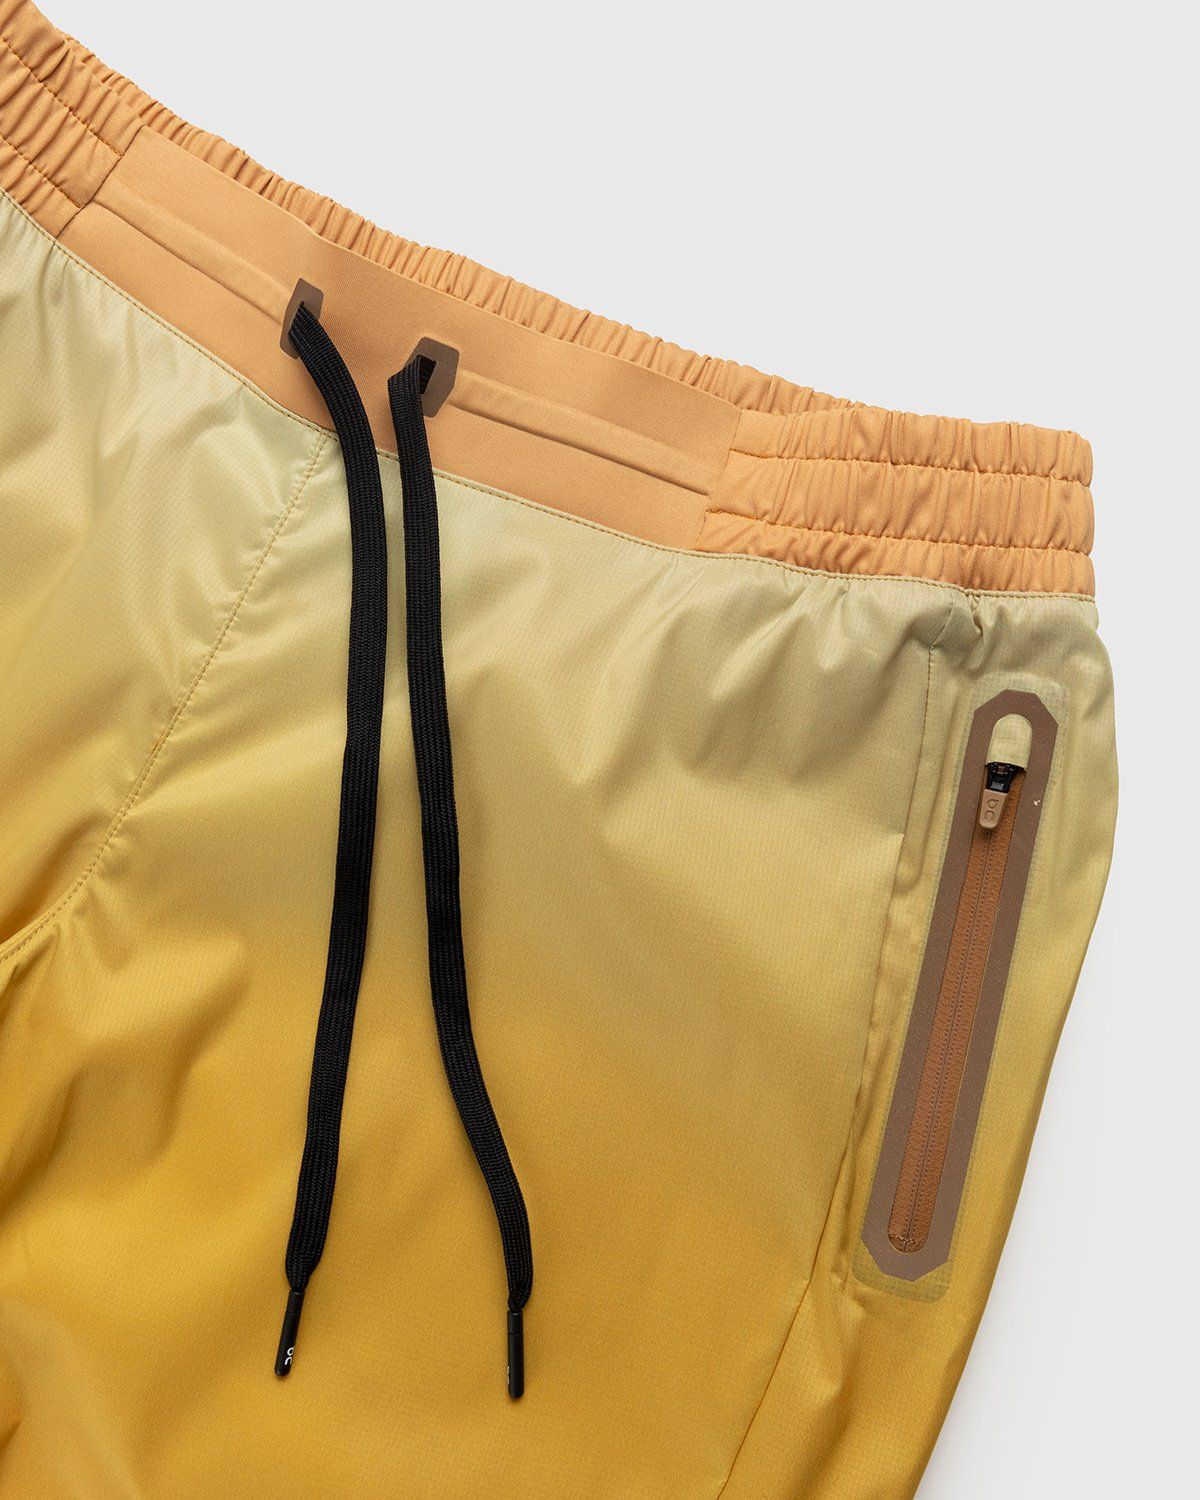 Loewe x On – Women's Technical Running Pants Gradient Orange - Pants - Orange - Image 5